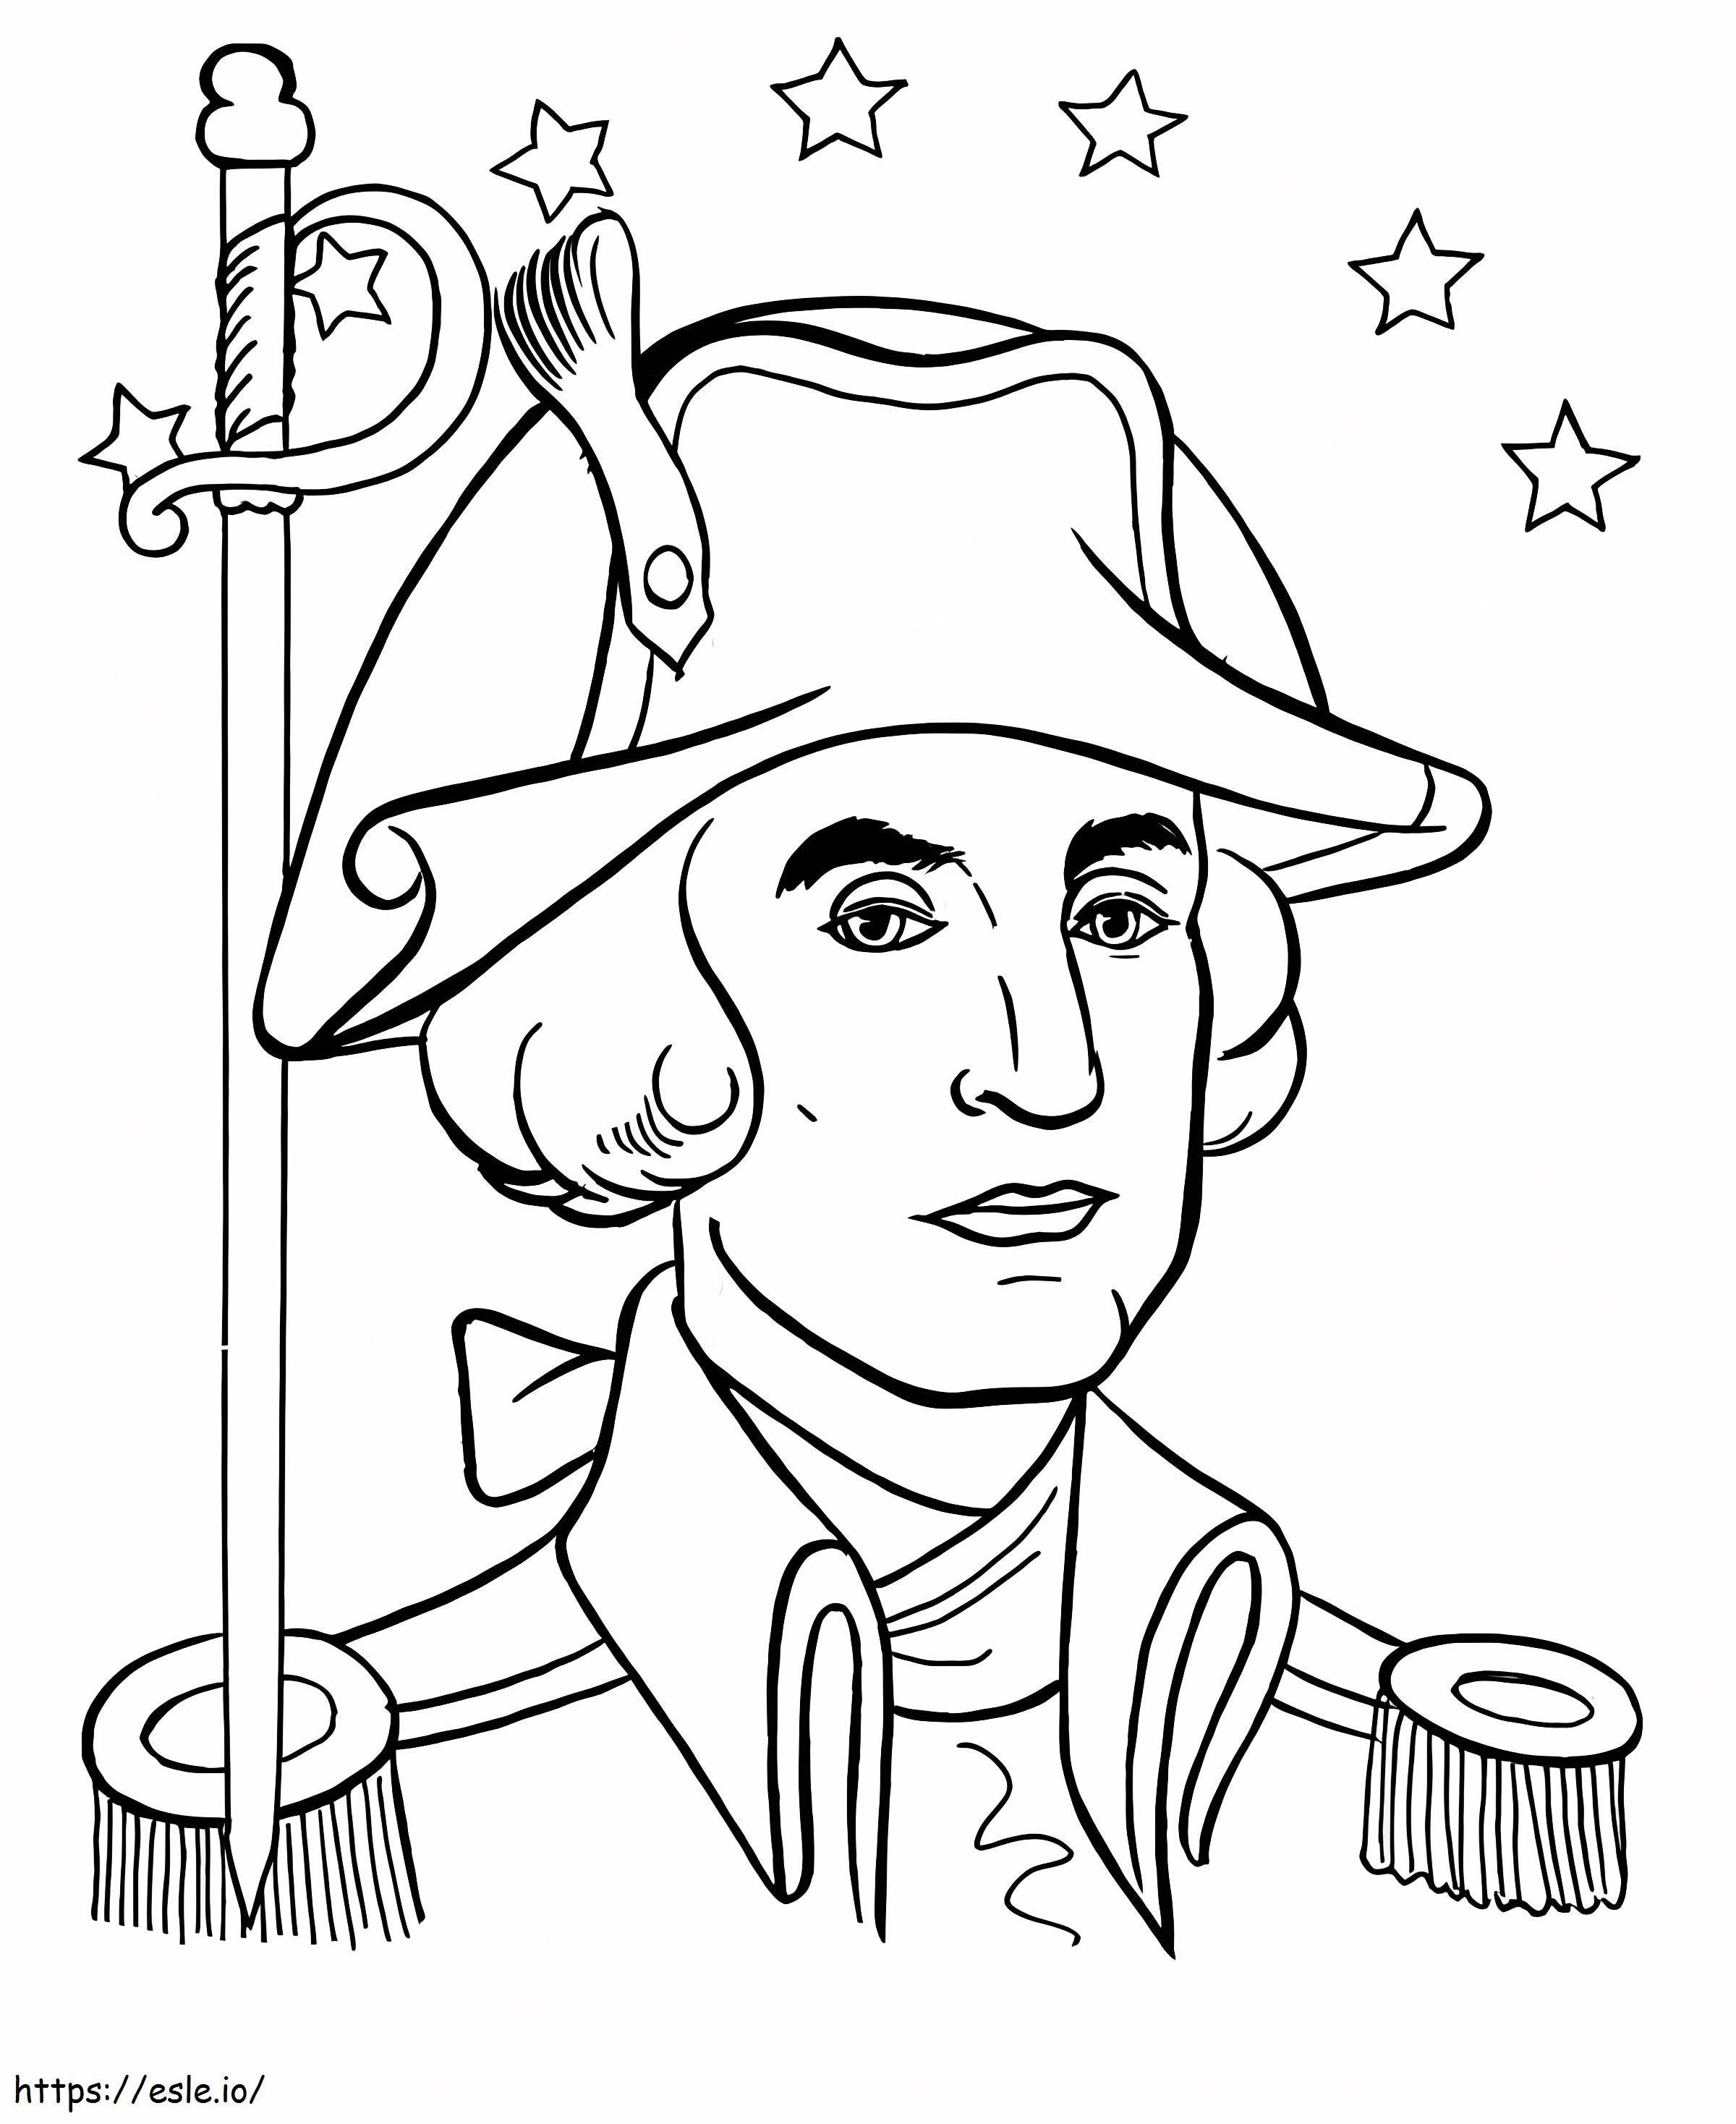 George Washington 10 coloring page